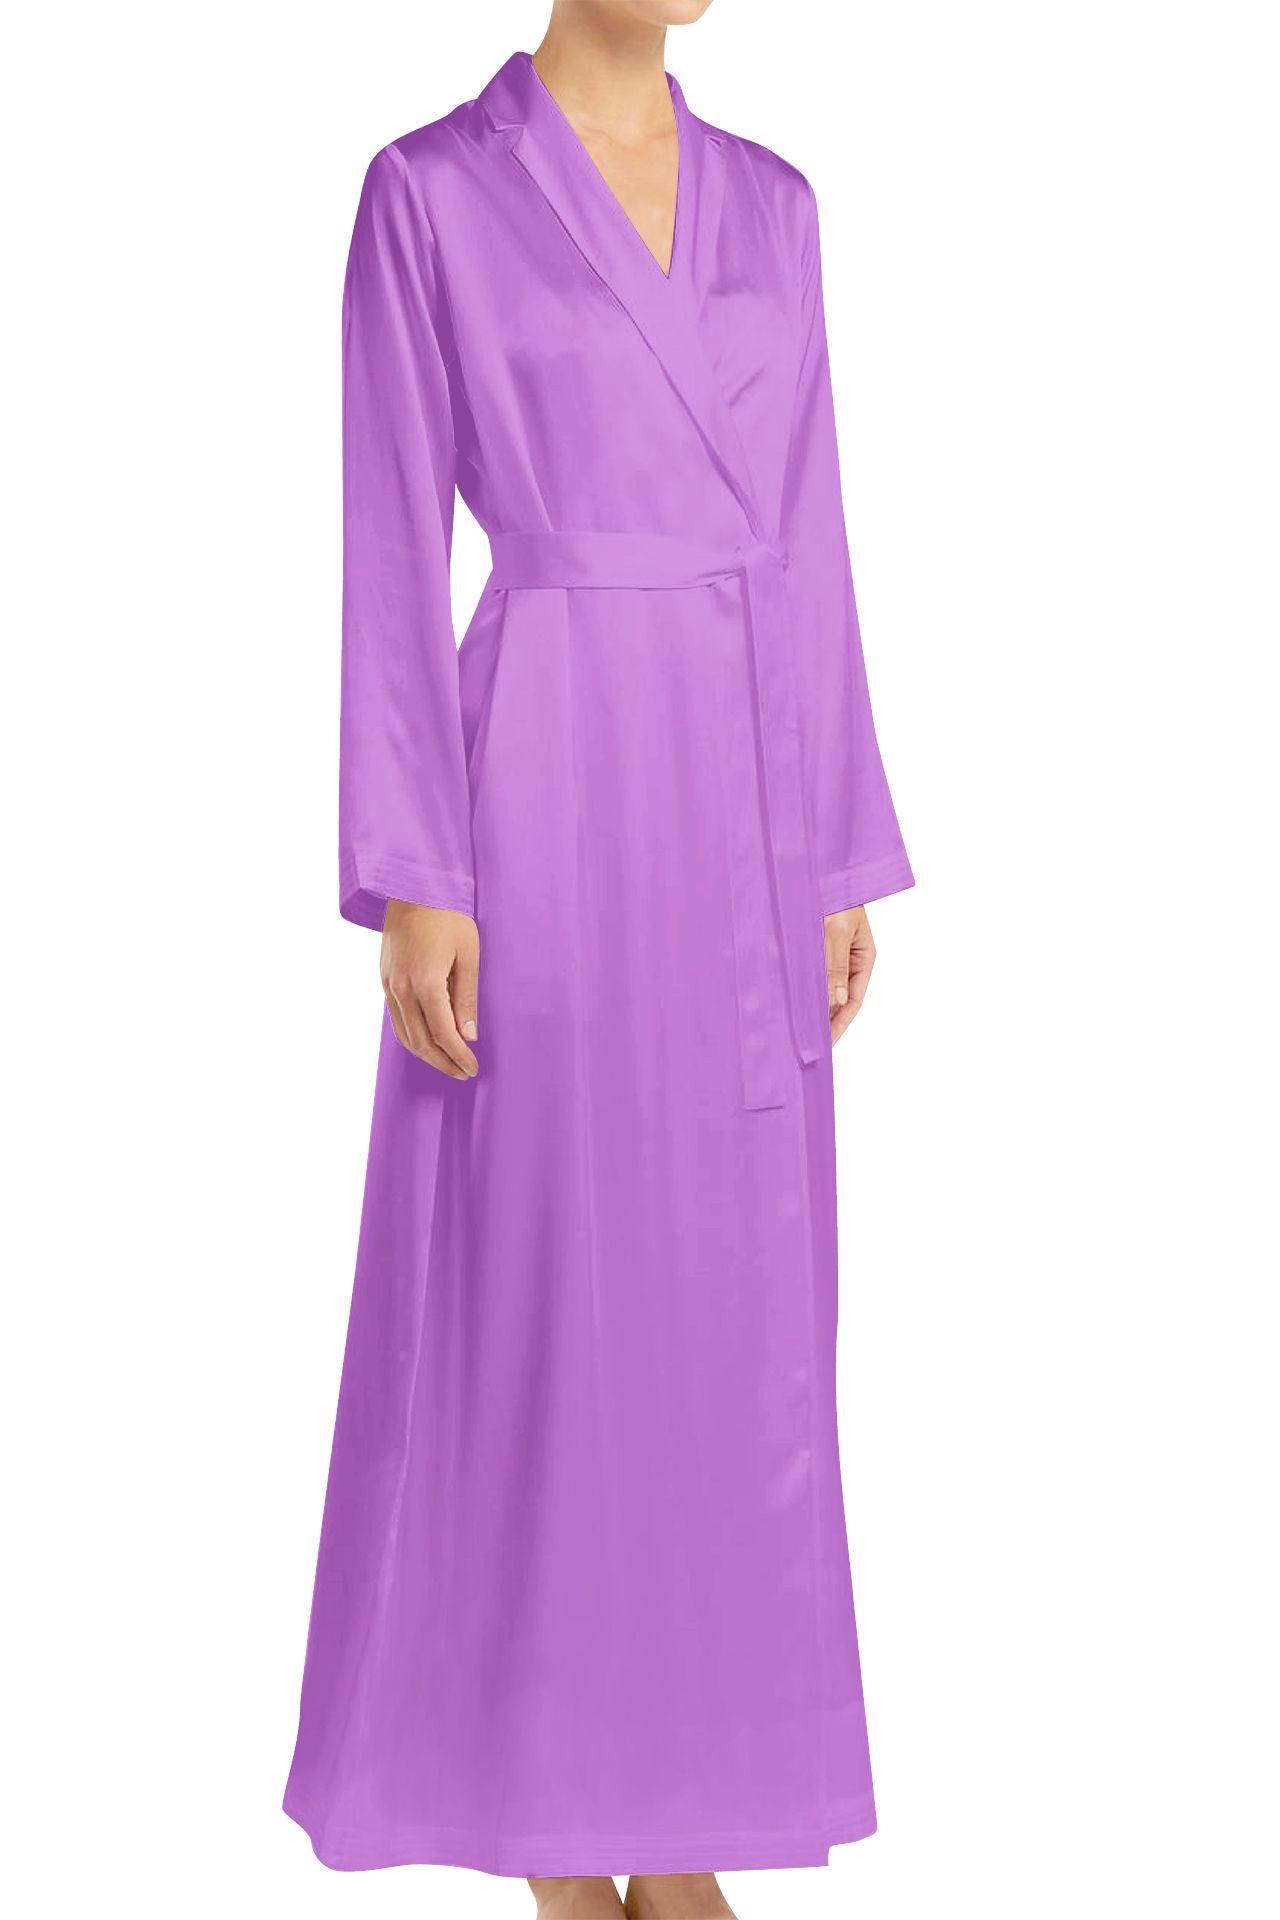 "purple dress wrap" "women's long sleeve wrap dress" "purple silk wrap dress" "Kyle X Shahida"